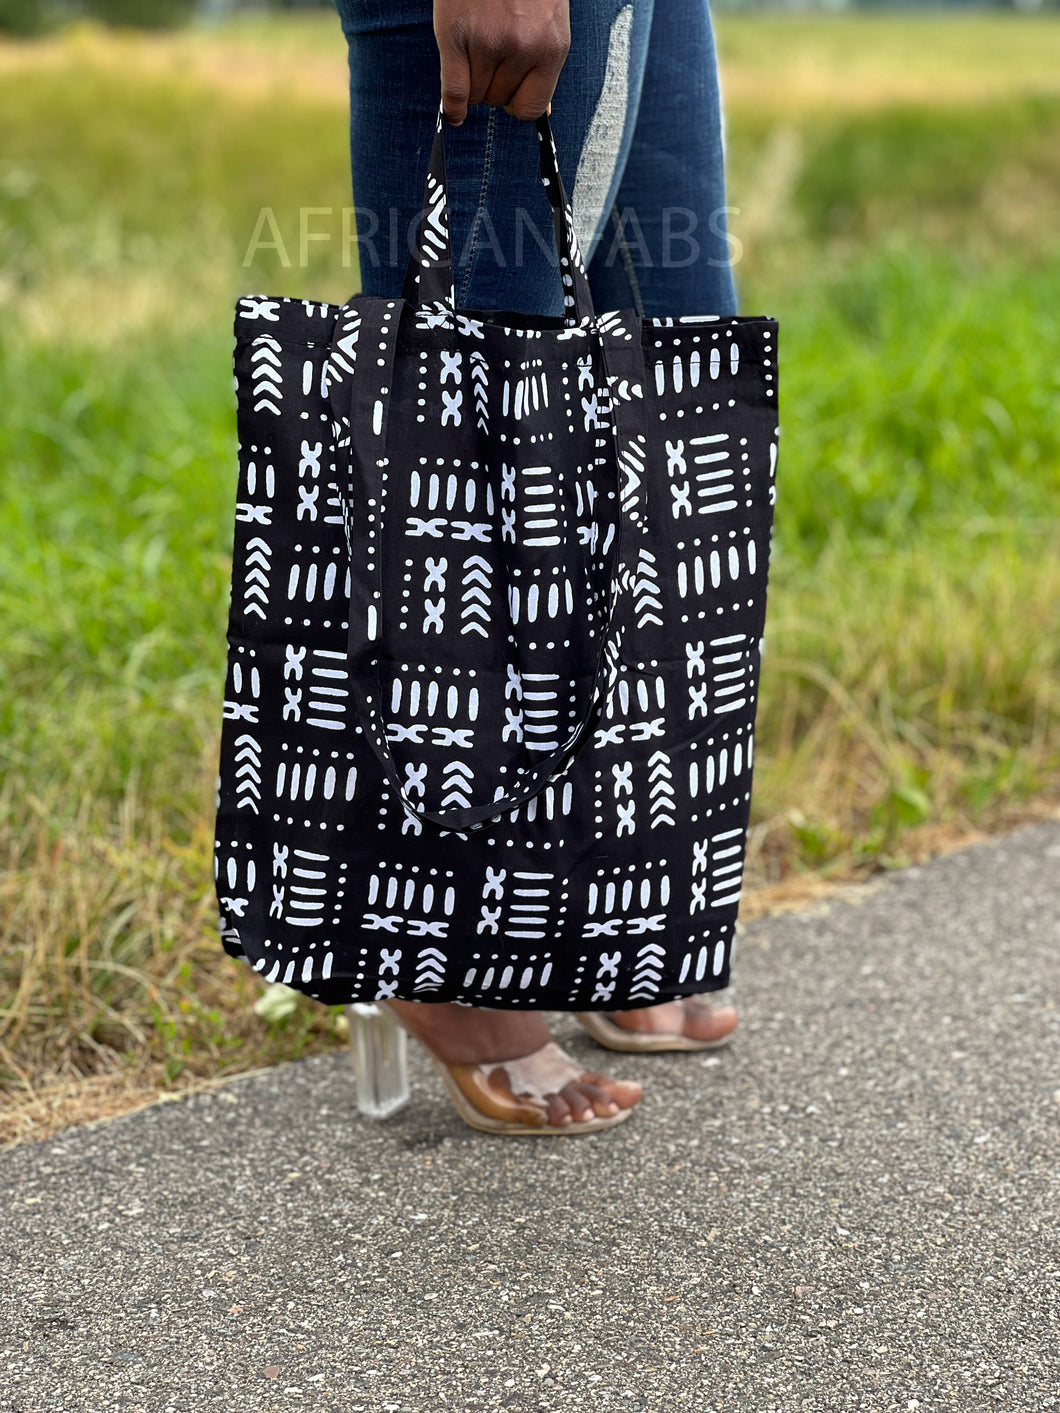 Shopper bag with African print - Black / white bogolan - Reusable Shopping Bag made of cotton